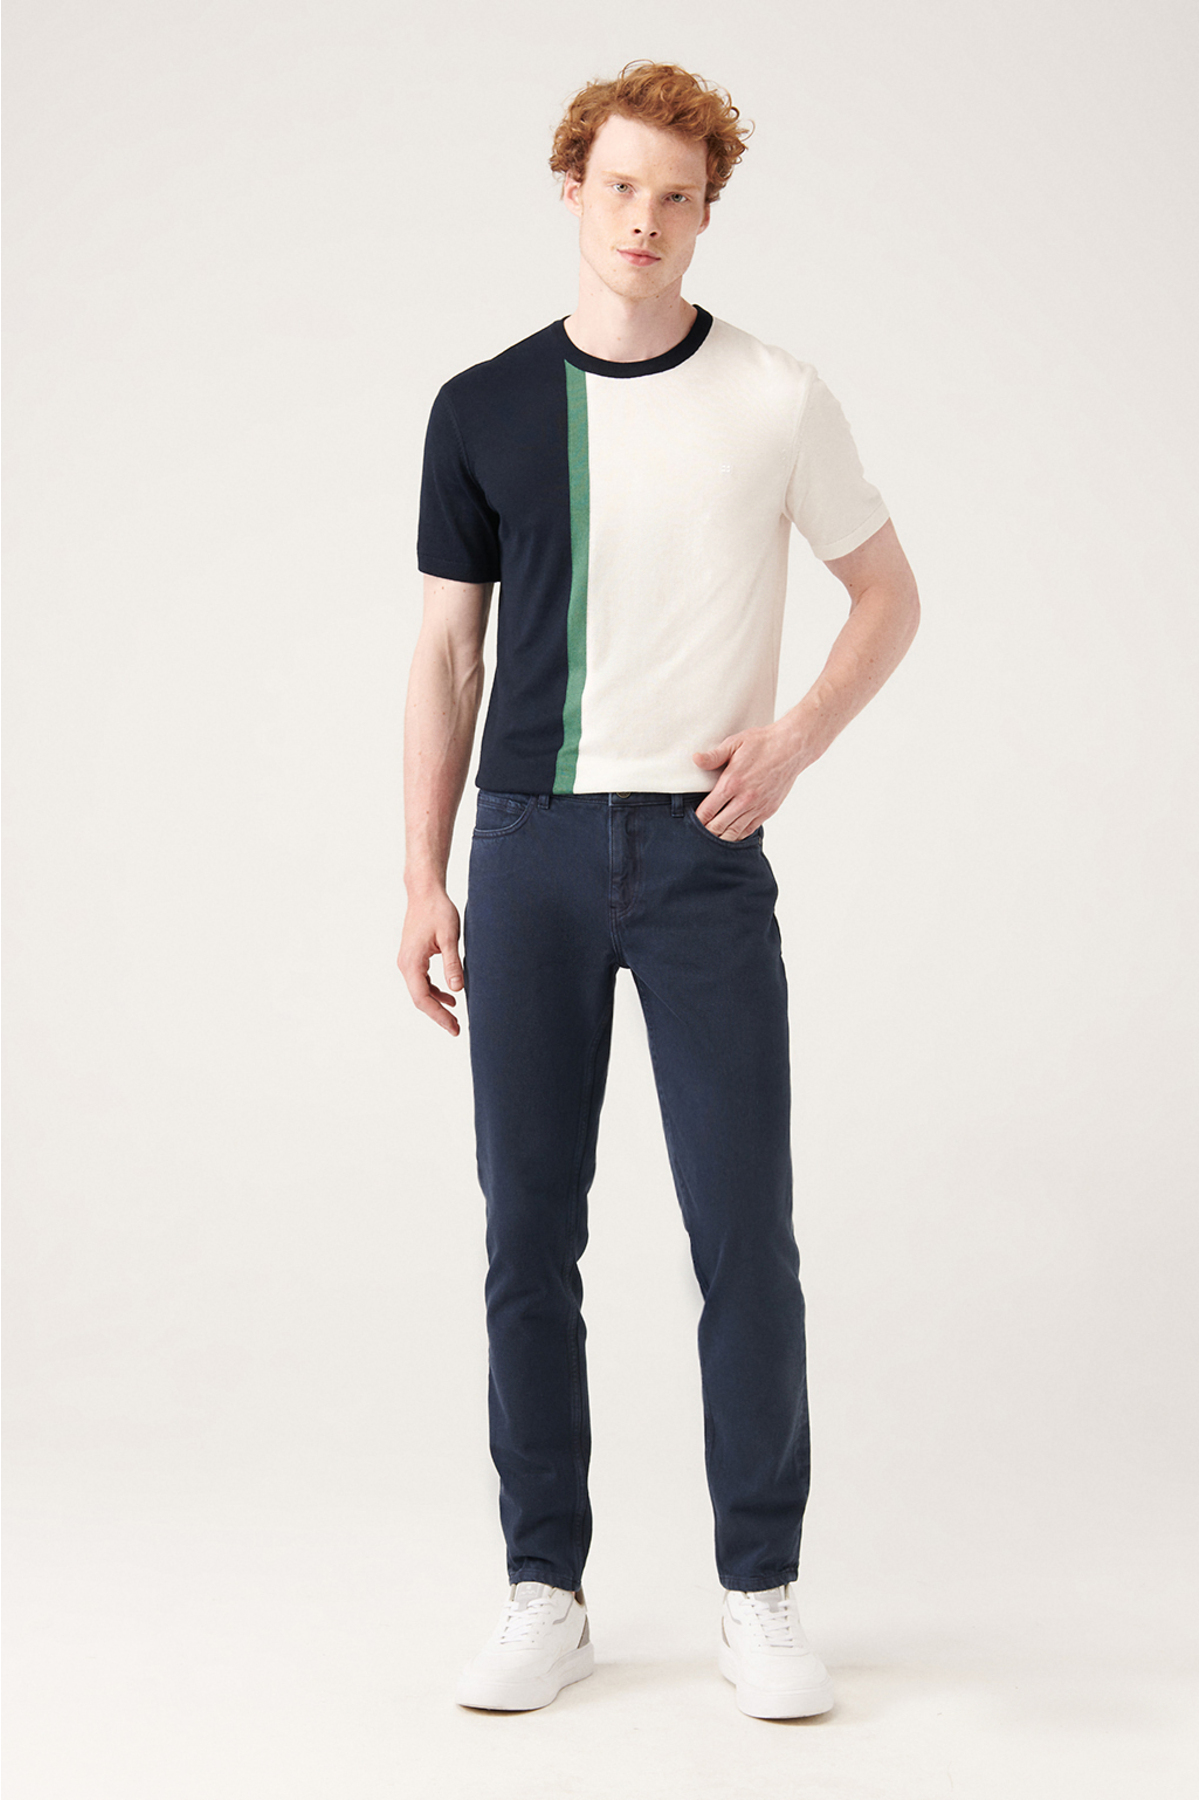 Avva Men's Navy Blue 100% Cotton Standard Fit Regular Cut Jean Trousers